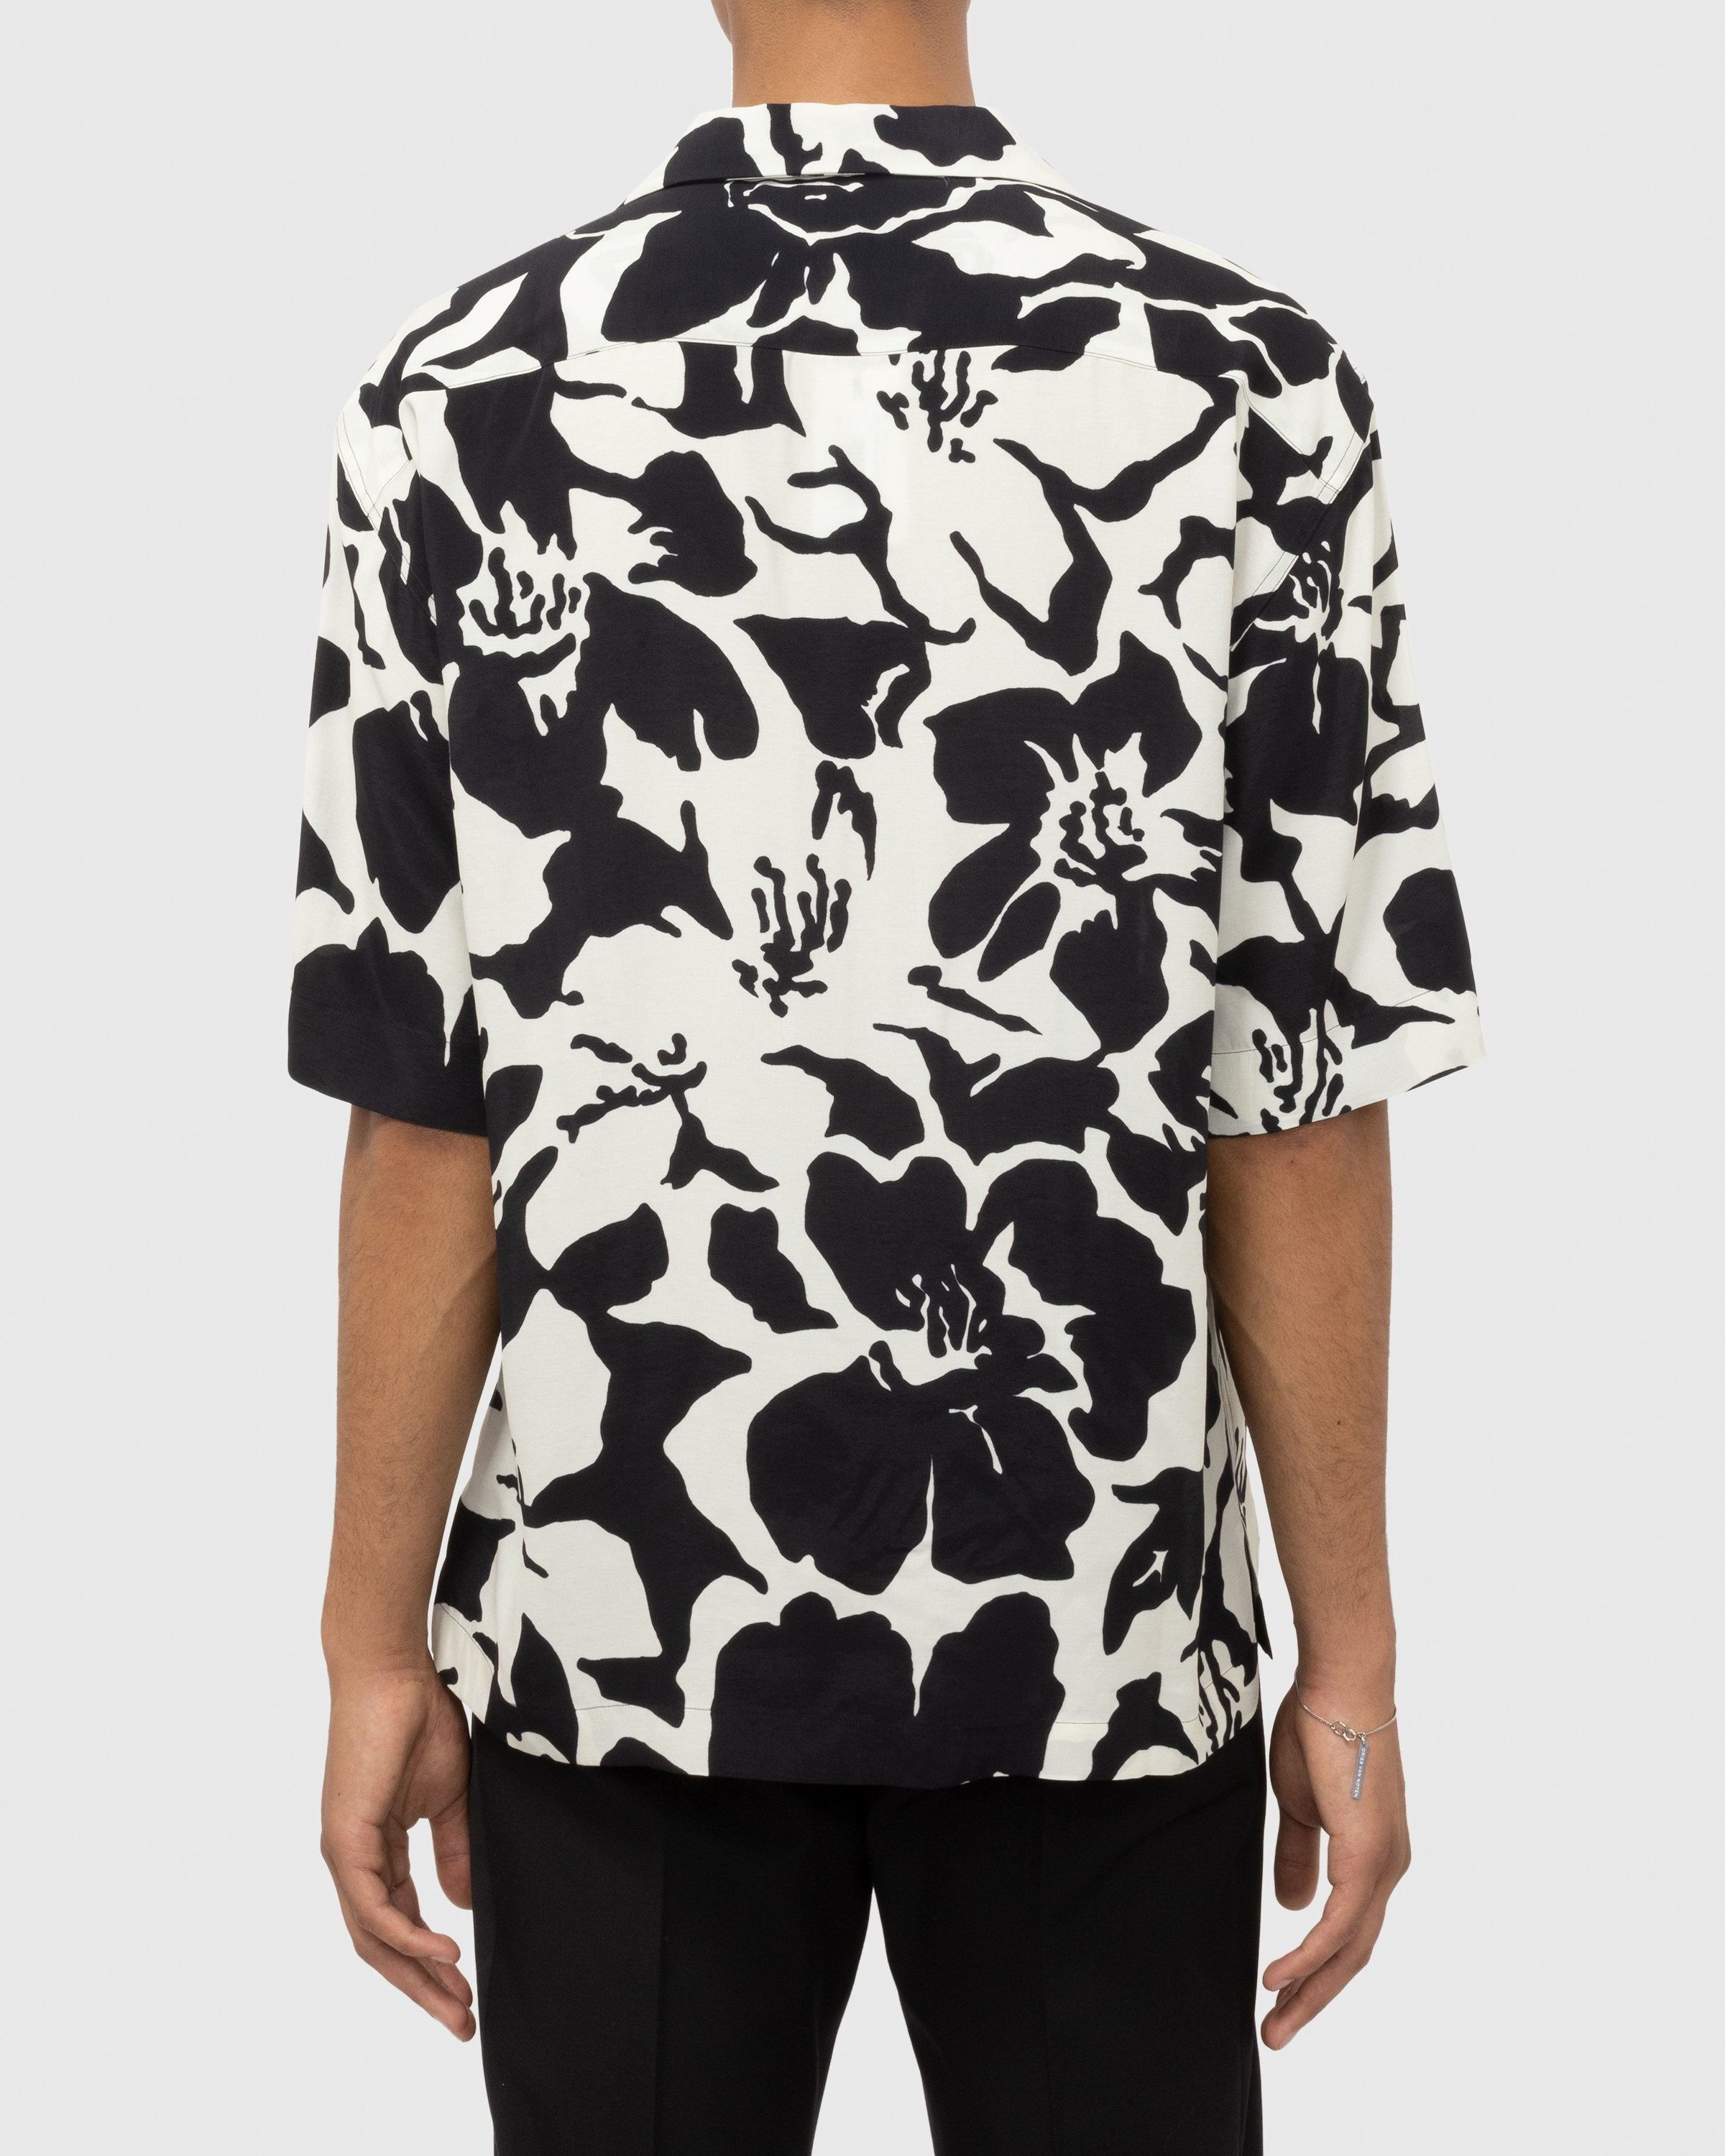 Dries van Noten – Floral Cassi Shirt Multi - Shortsleeve Shirts - Multi - Image 4